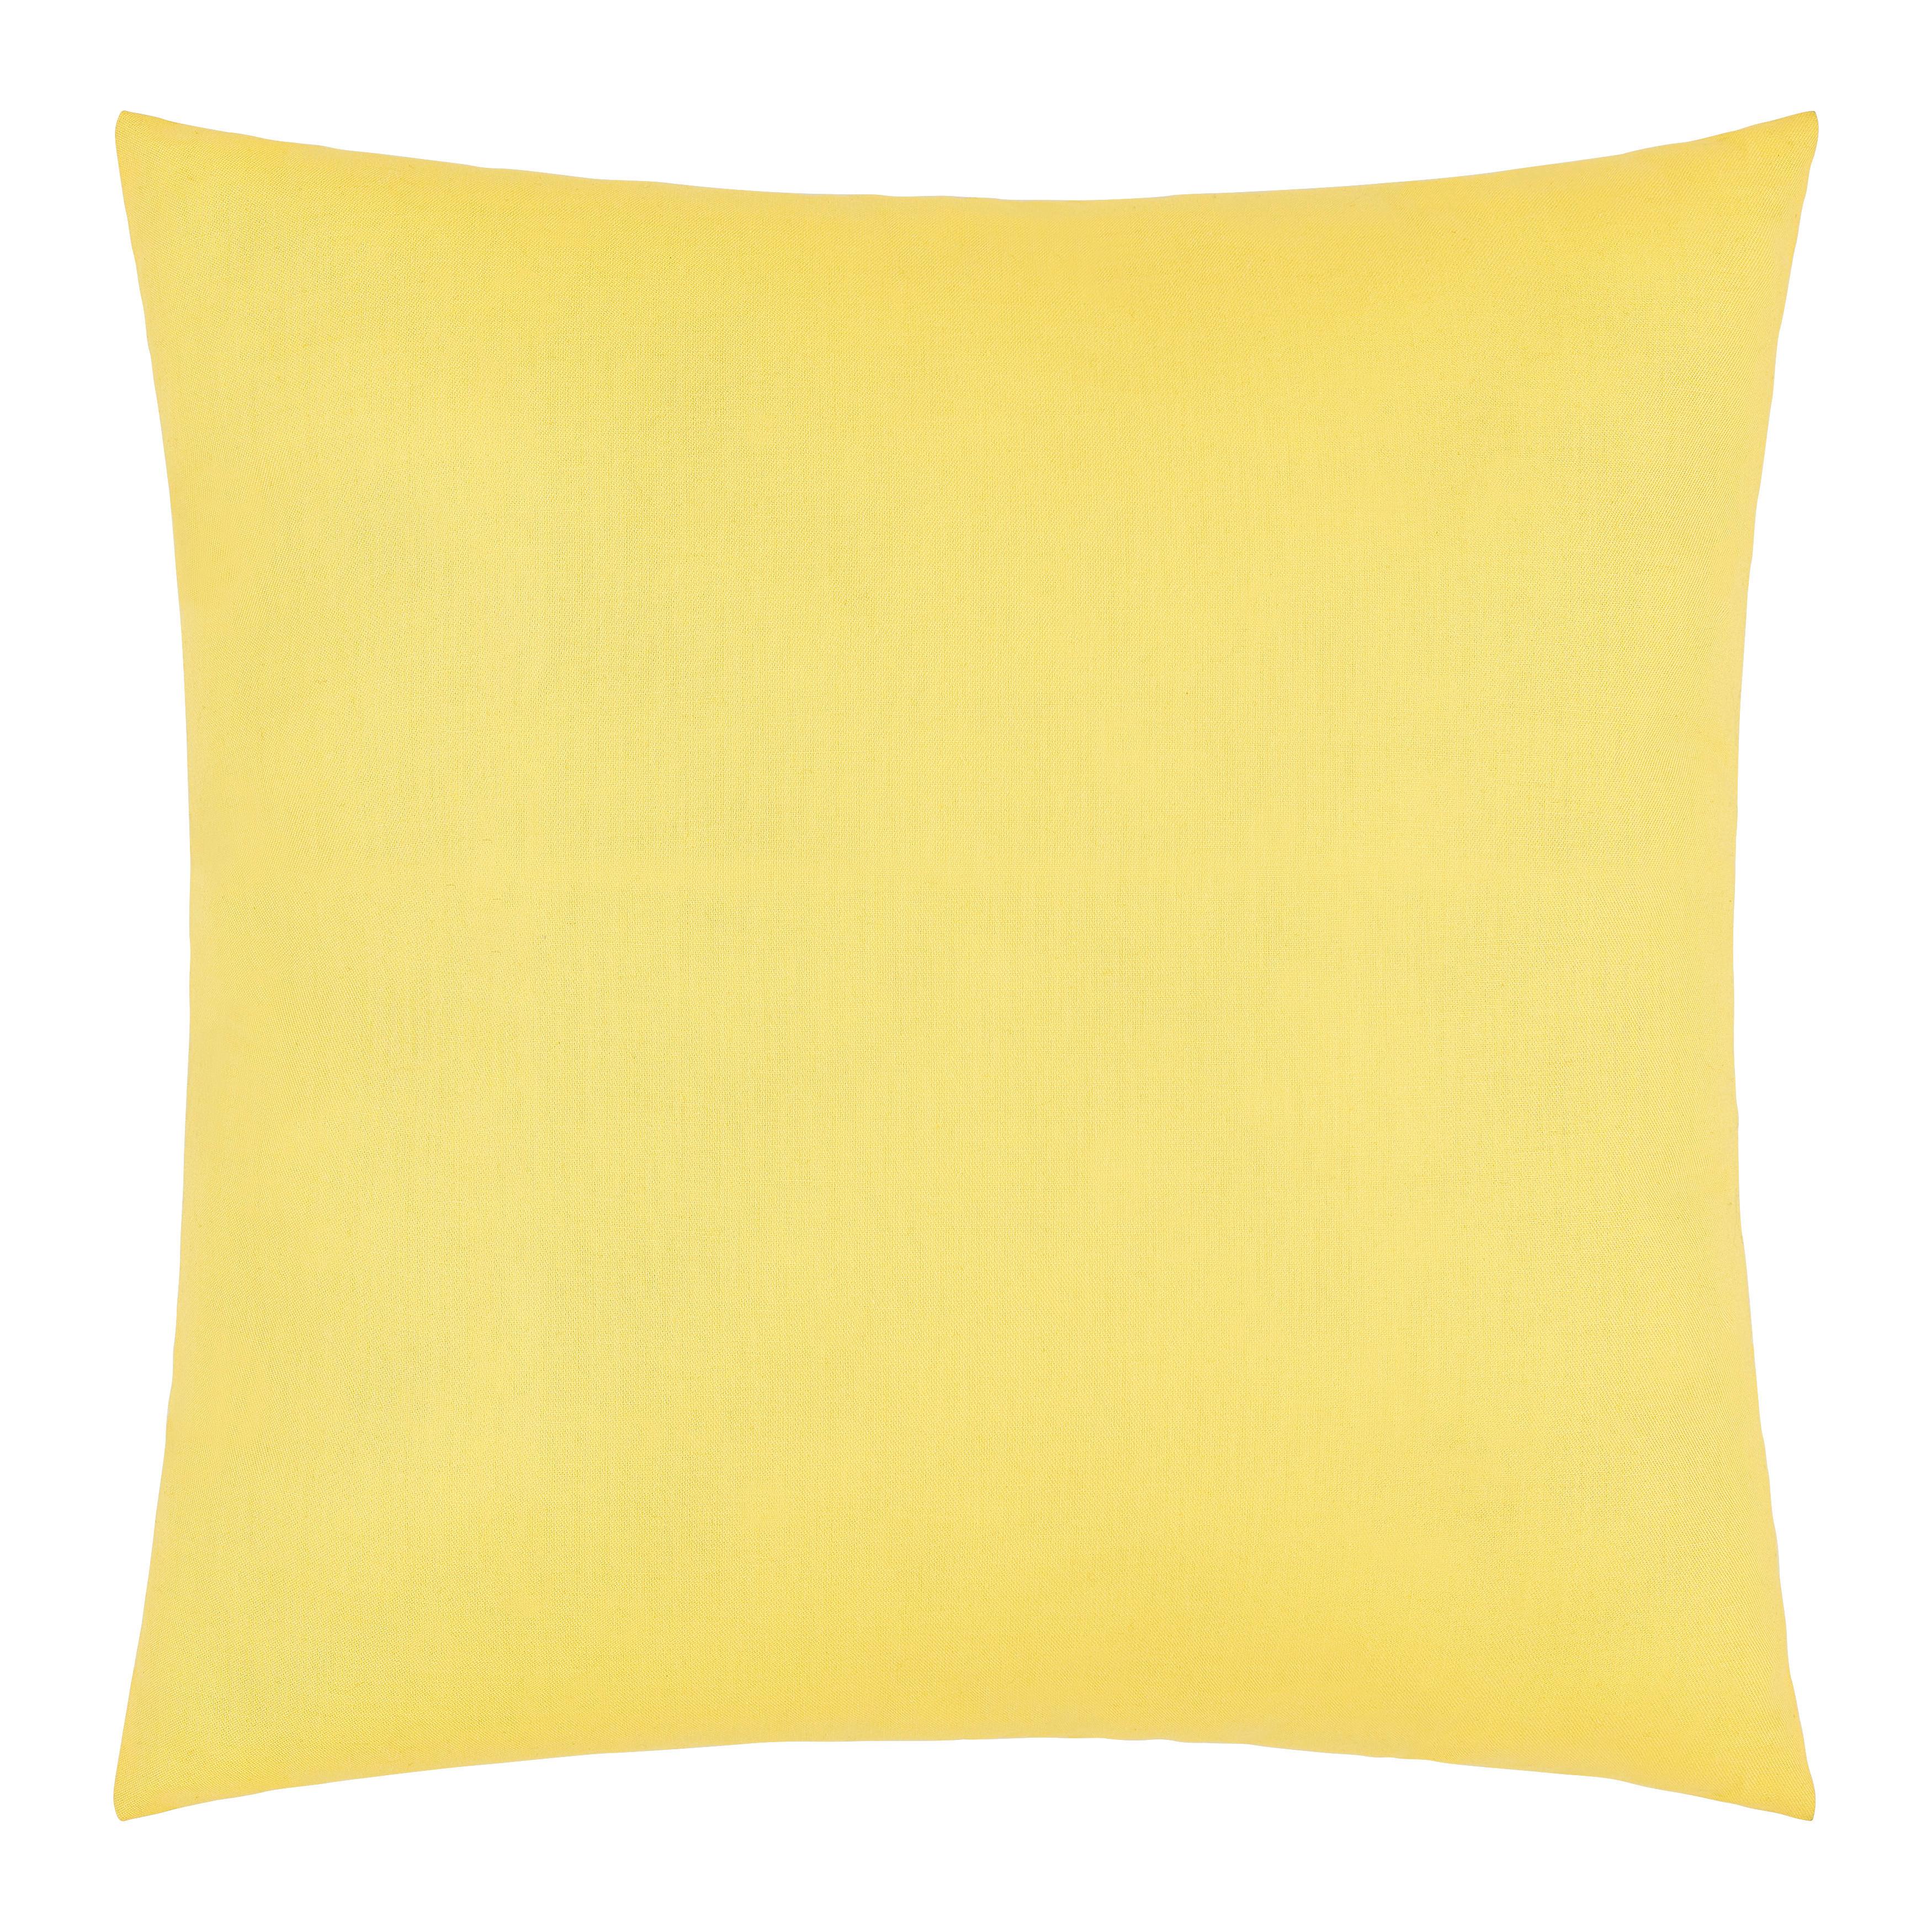 Dekorační Polštář Mex, 48/48cm, Žlutá - žlutá, Konvenční, textil (48/48cm) - Modern Living